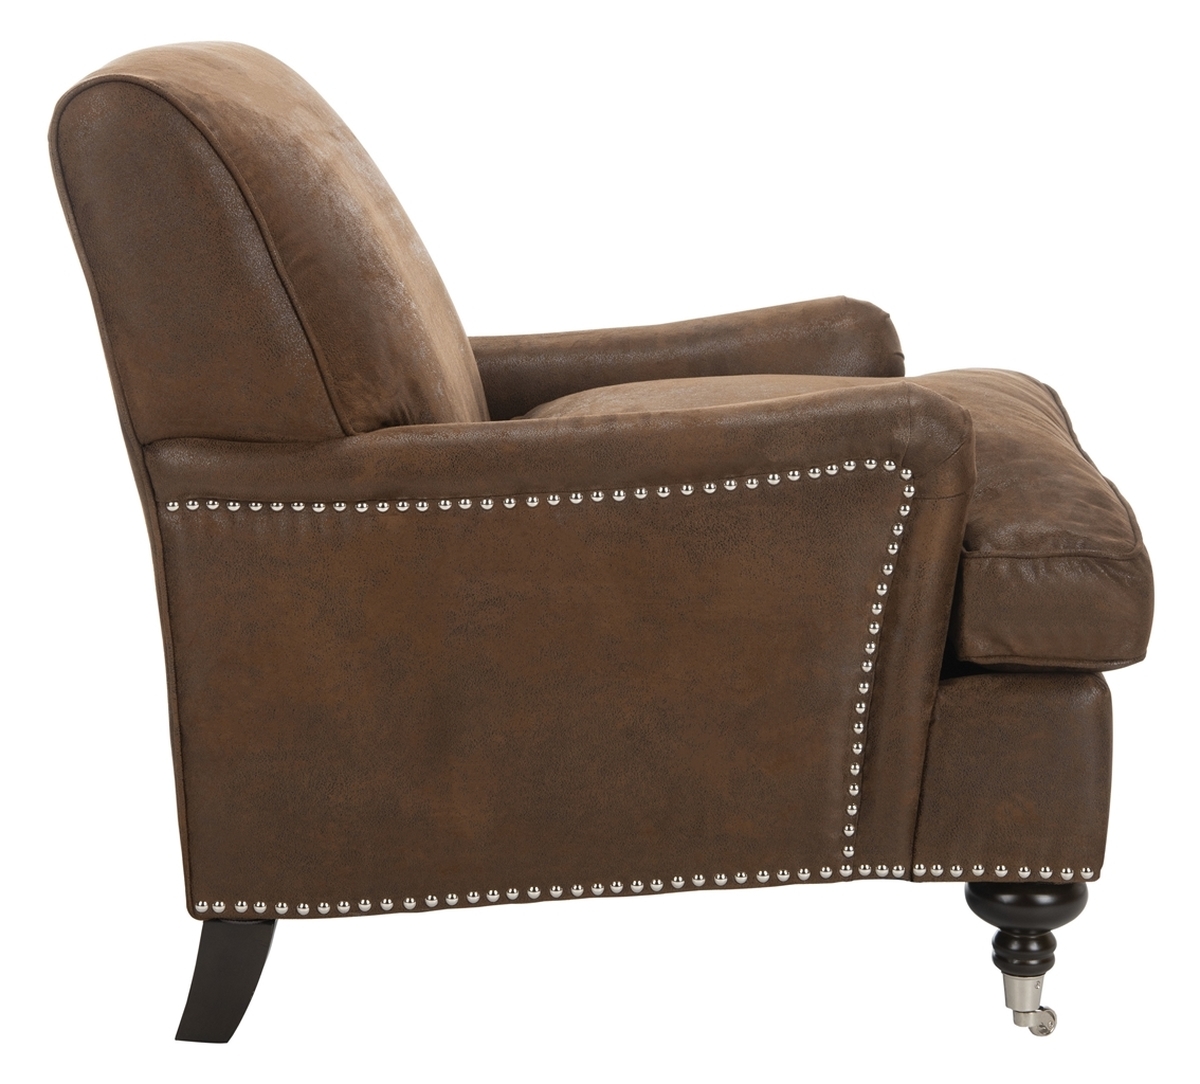 Chloe Club Chair - Brown/Espresso - Safavieh - Image 2